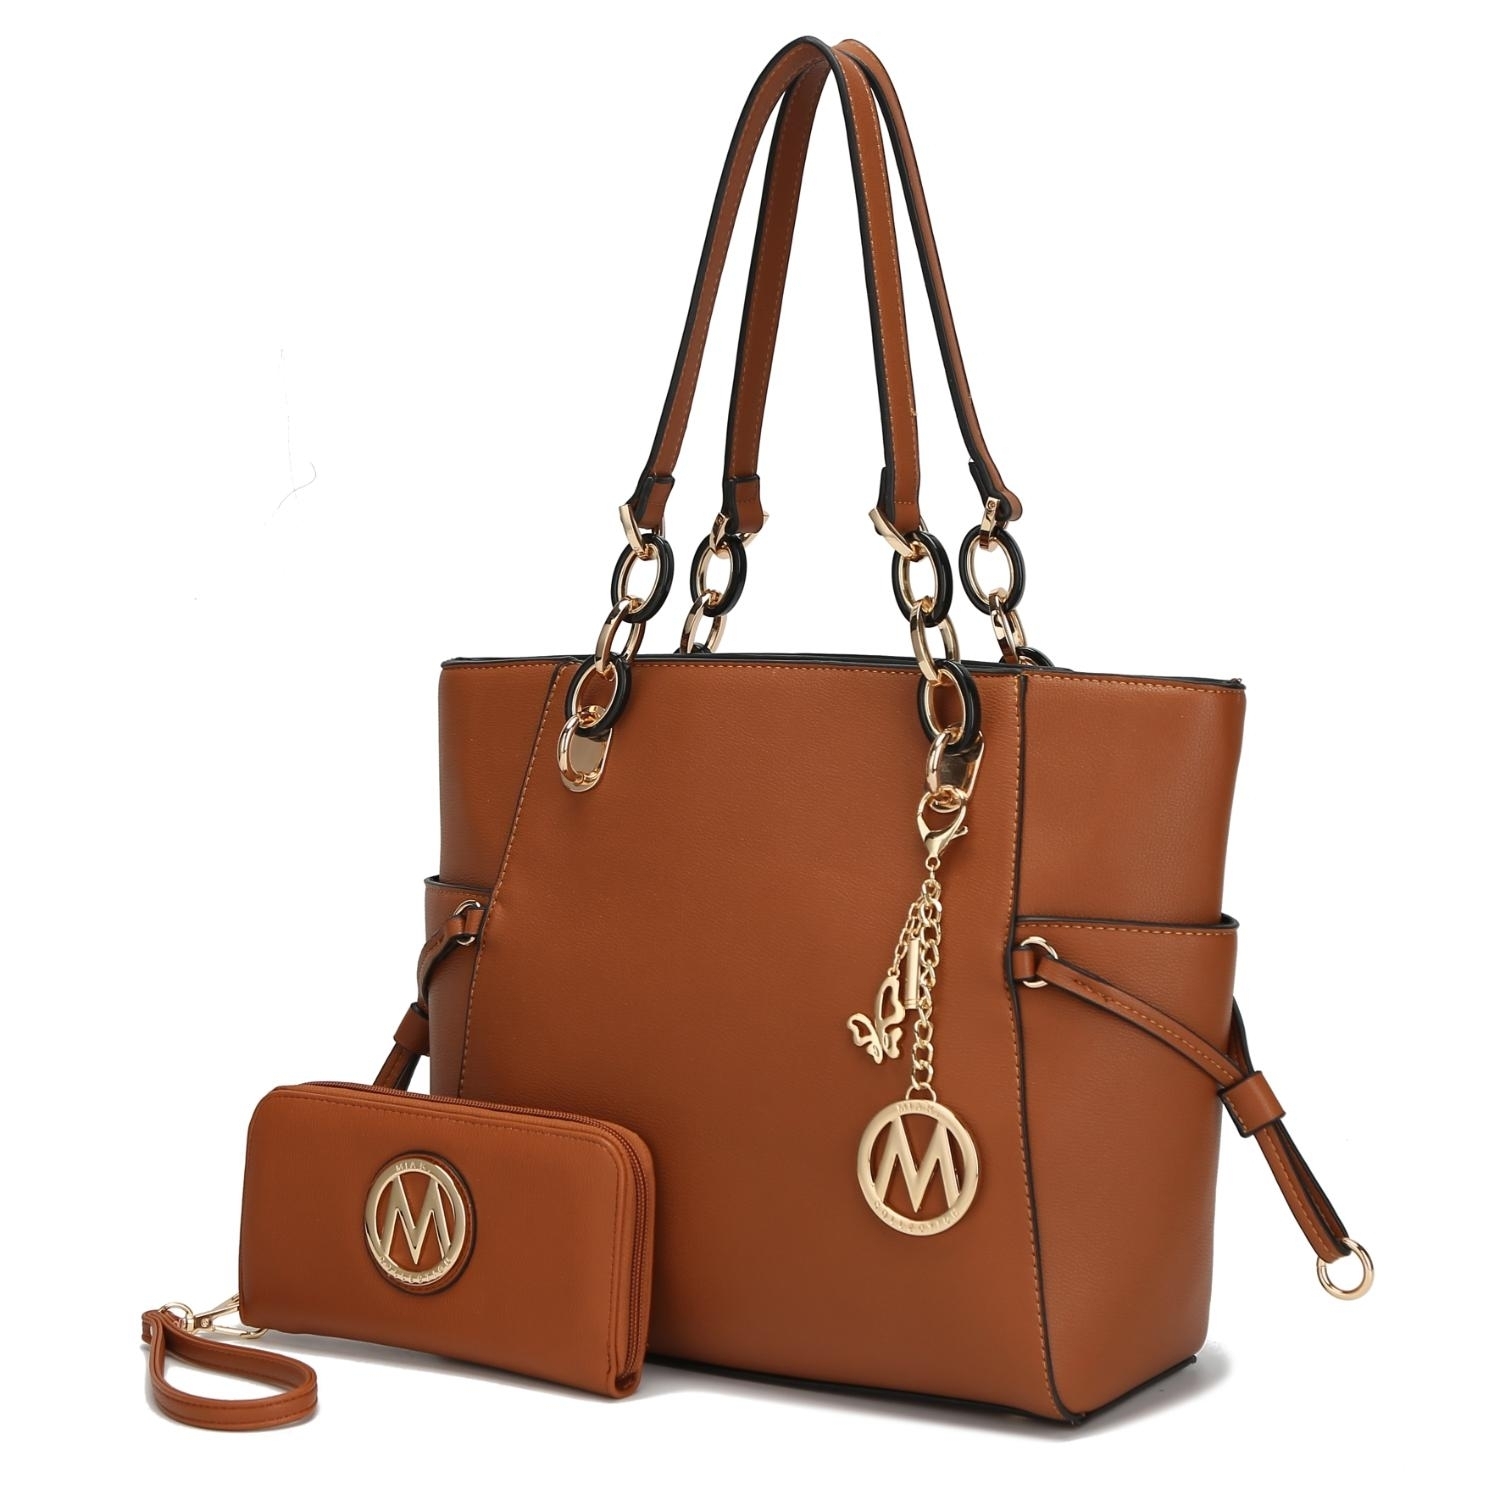 MKF Collection Yale Tote Handbag With Wallet By Mia K. - Cognac Brown